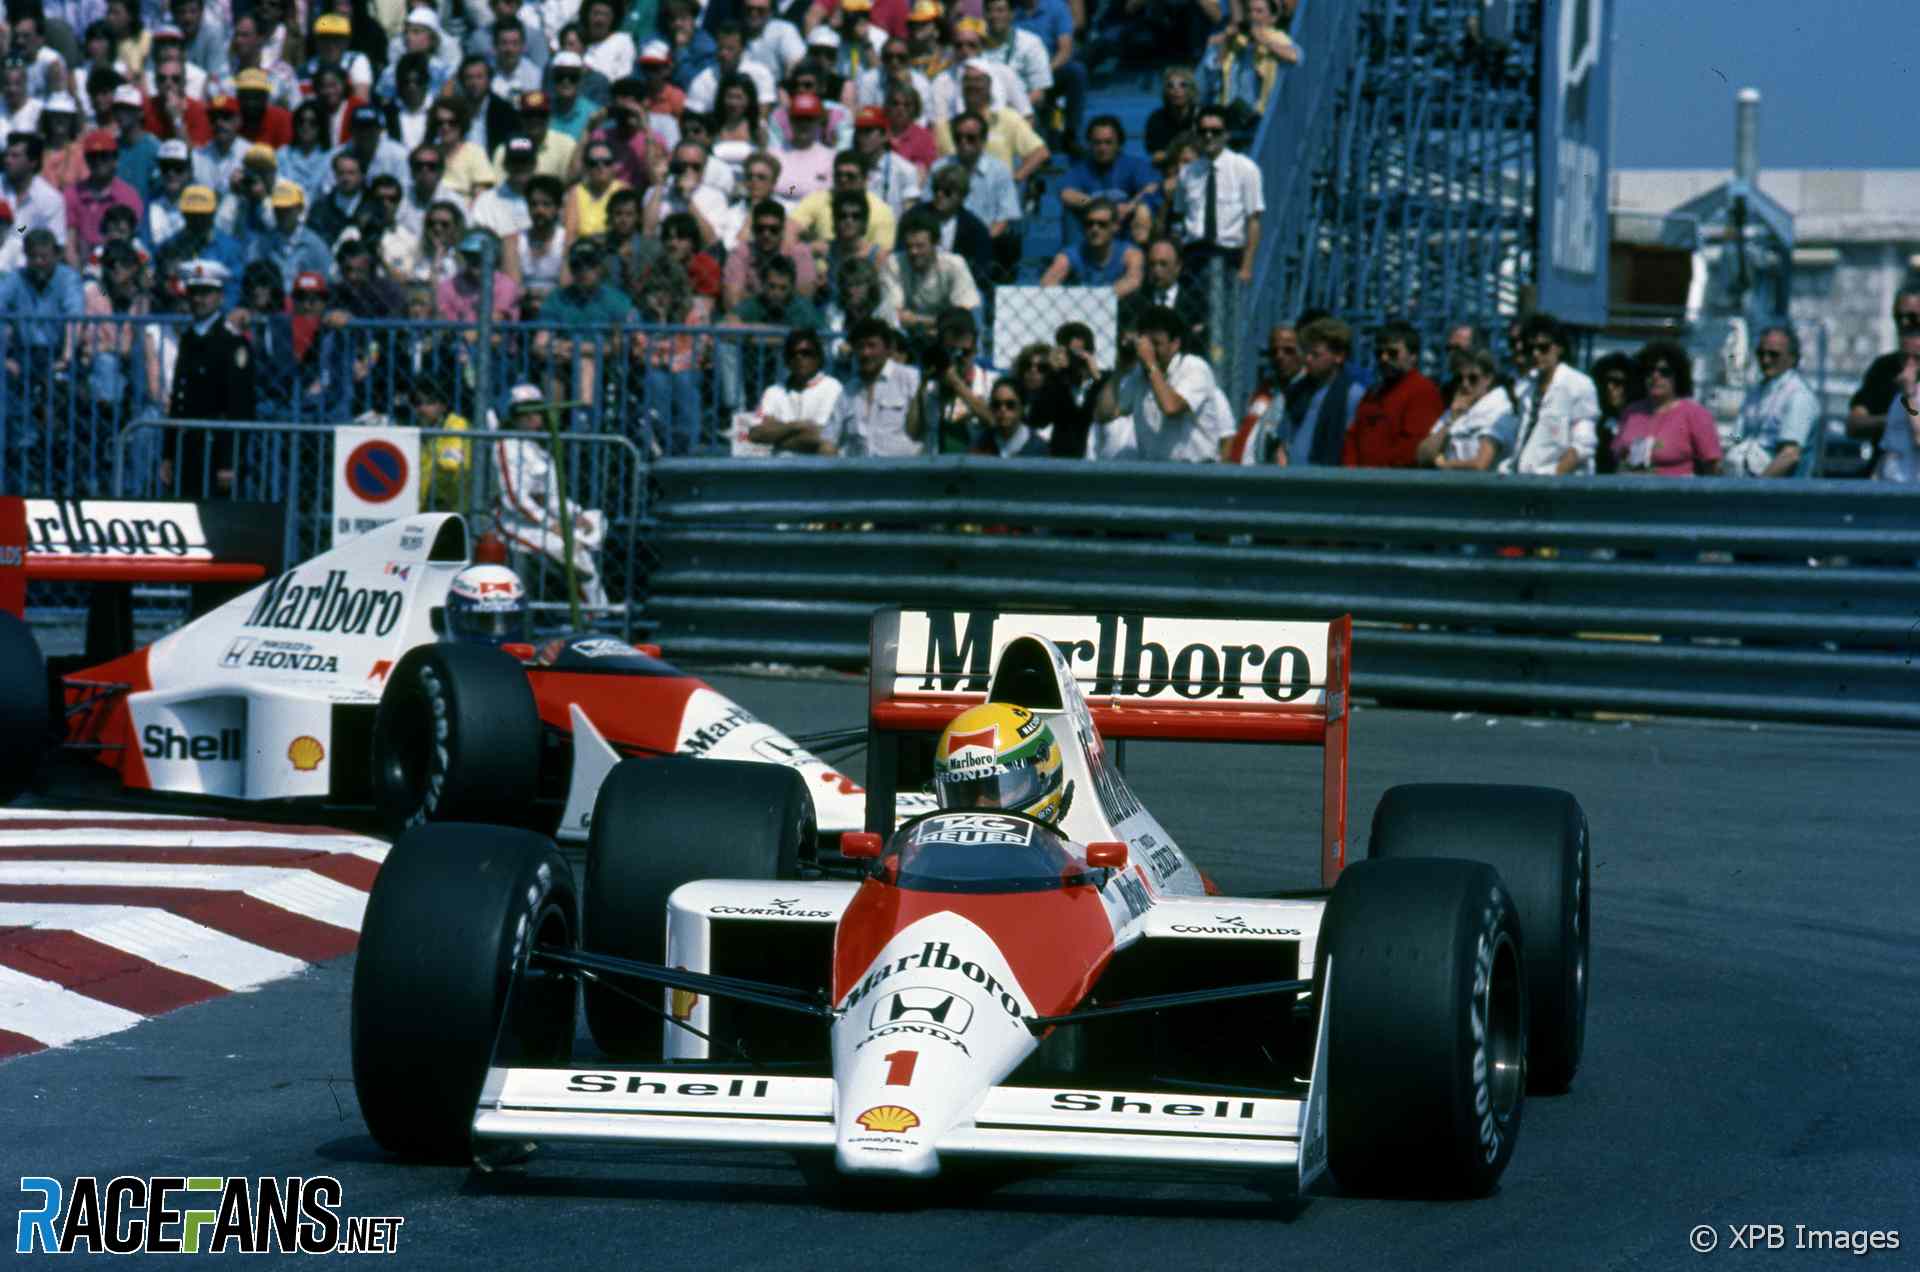 Ayrton Senna, Alain Prost, McLaren, Monaco, 1989